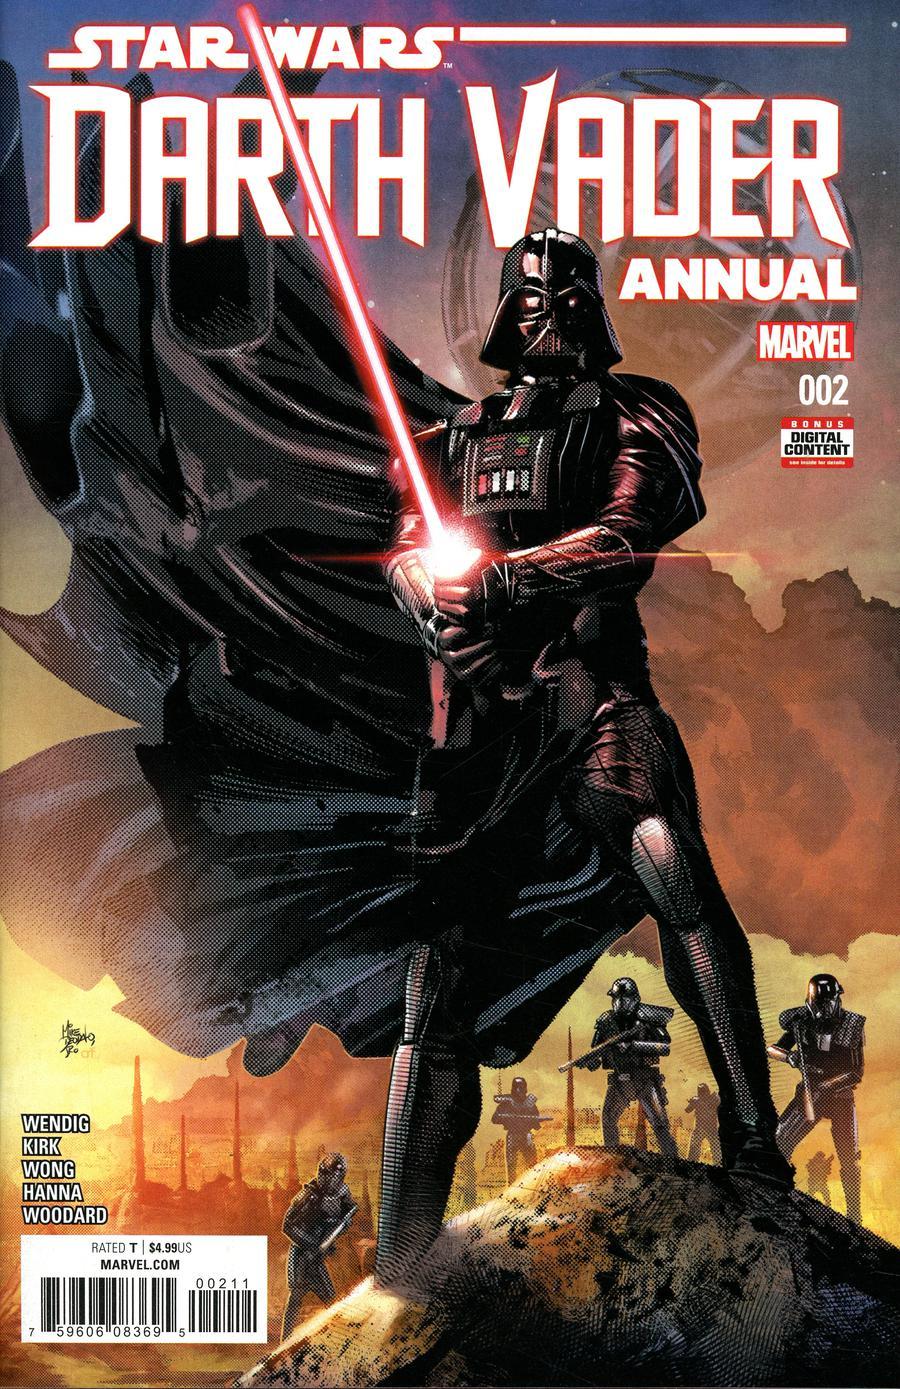 Darth Vader Vol. 2 Annual #2